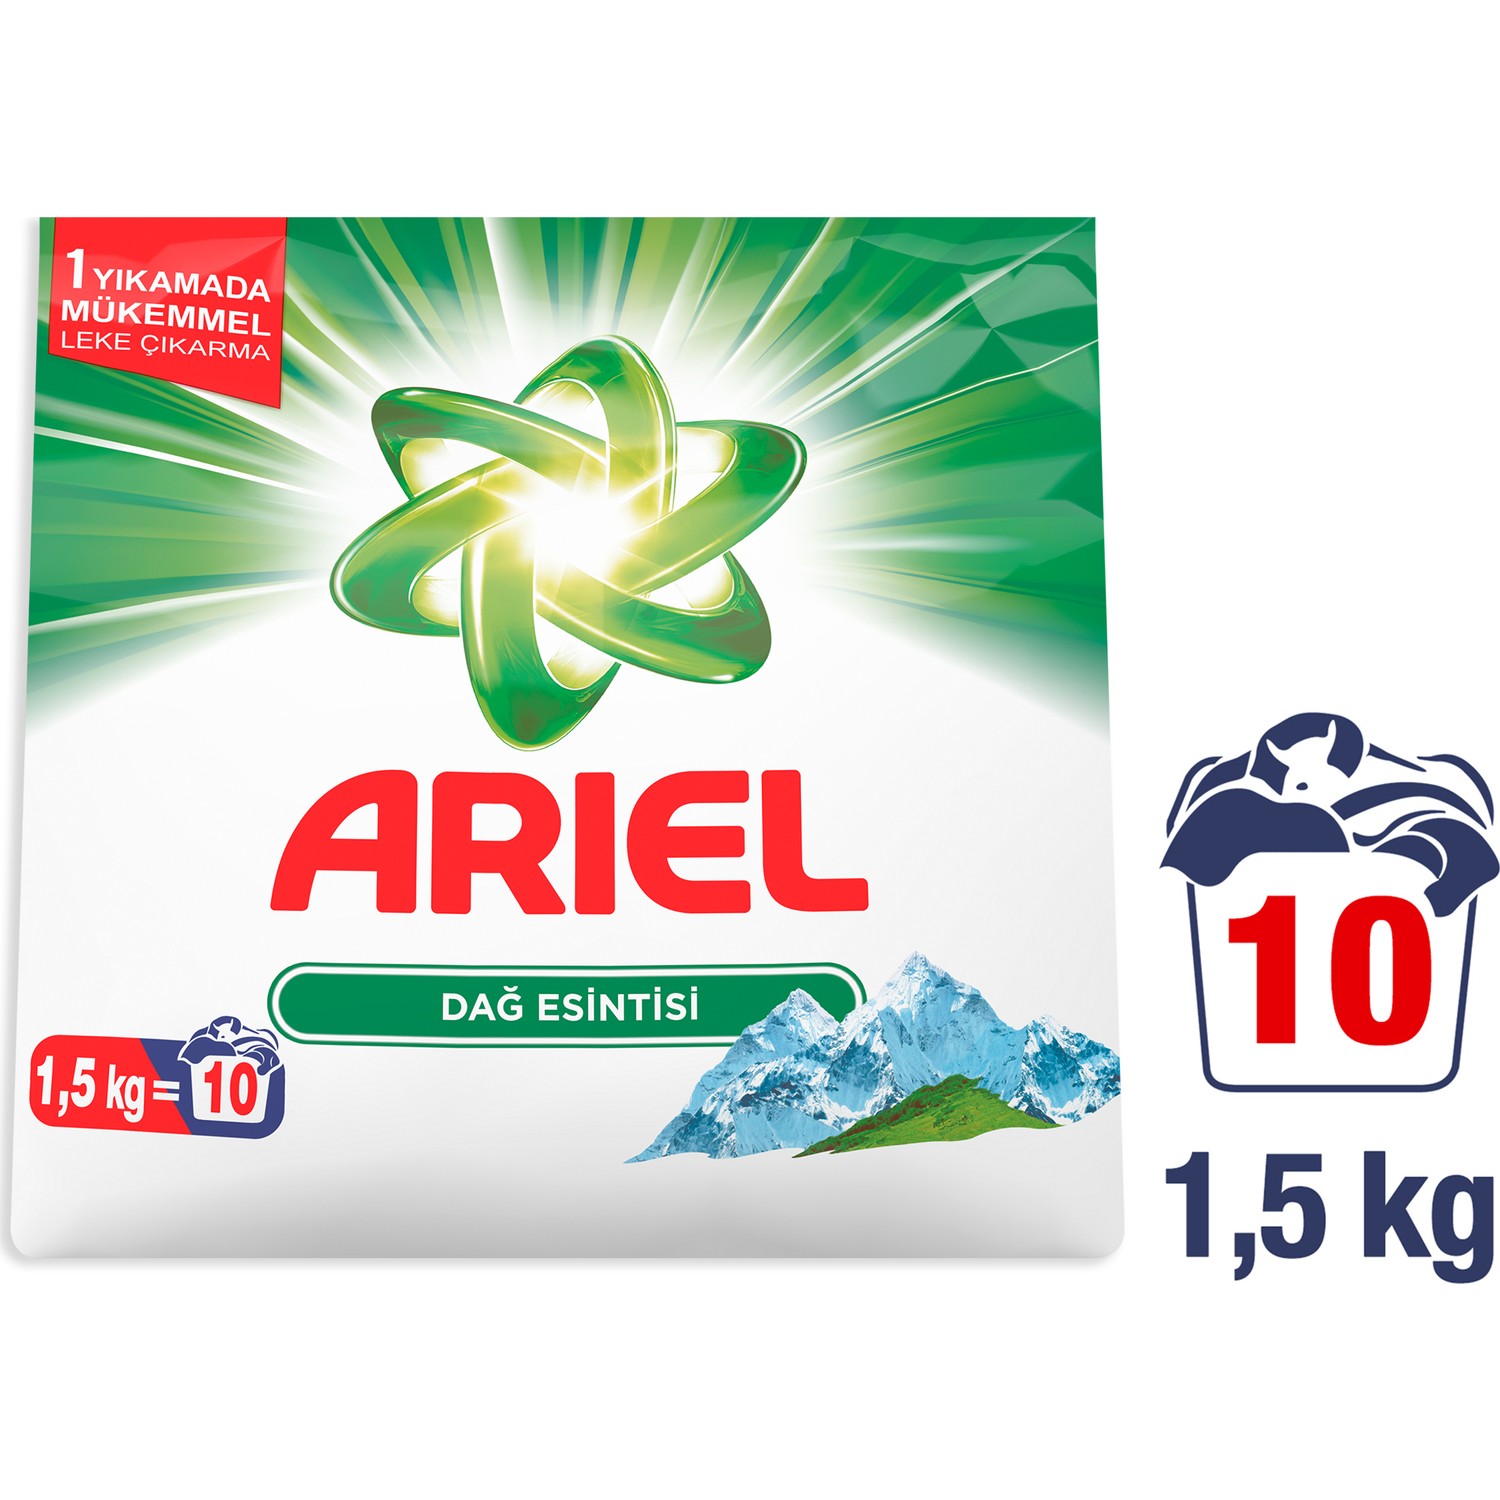 Ariel Çamaşır Deterjanı Dağ Esintisi 1,5 kg Fiyatı